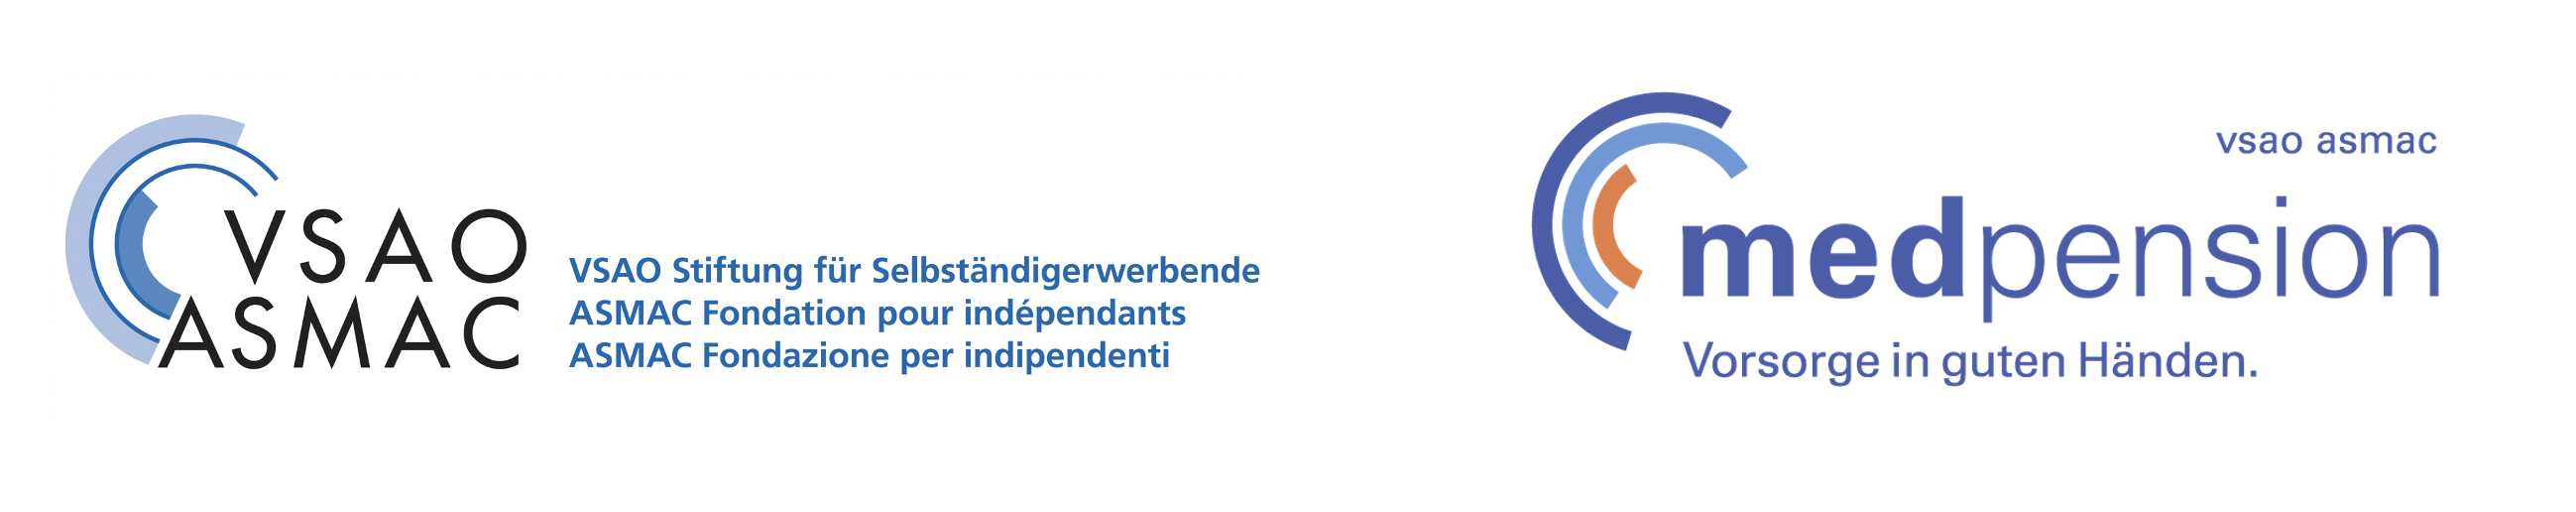 Logo Redesign Medpension consign